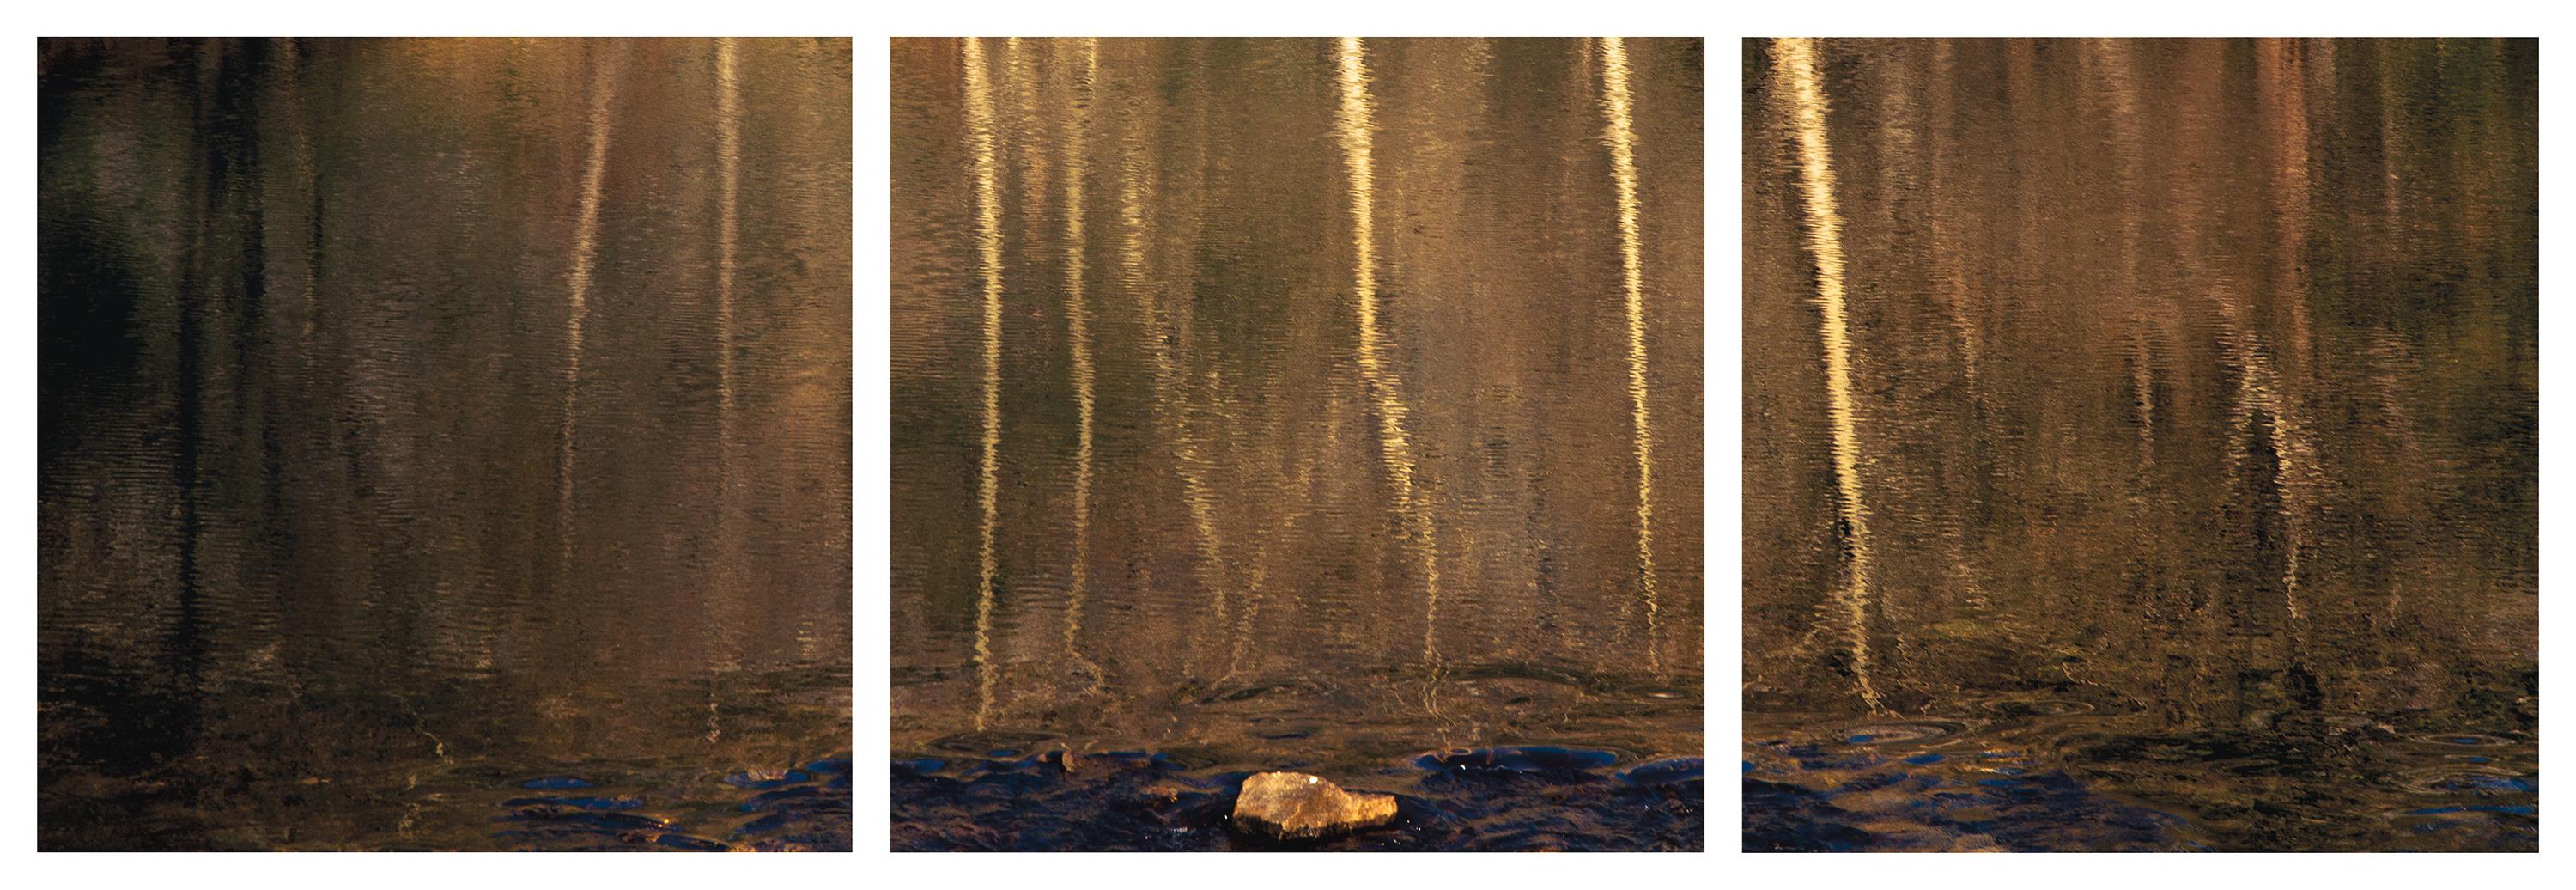 Sophia Milligan Landscape Photograph – Wa-Kal-La" Fotografisches Triptychon Yosemite Wasser Wood Tree Stone Nature Gold 